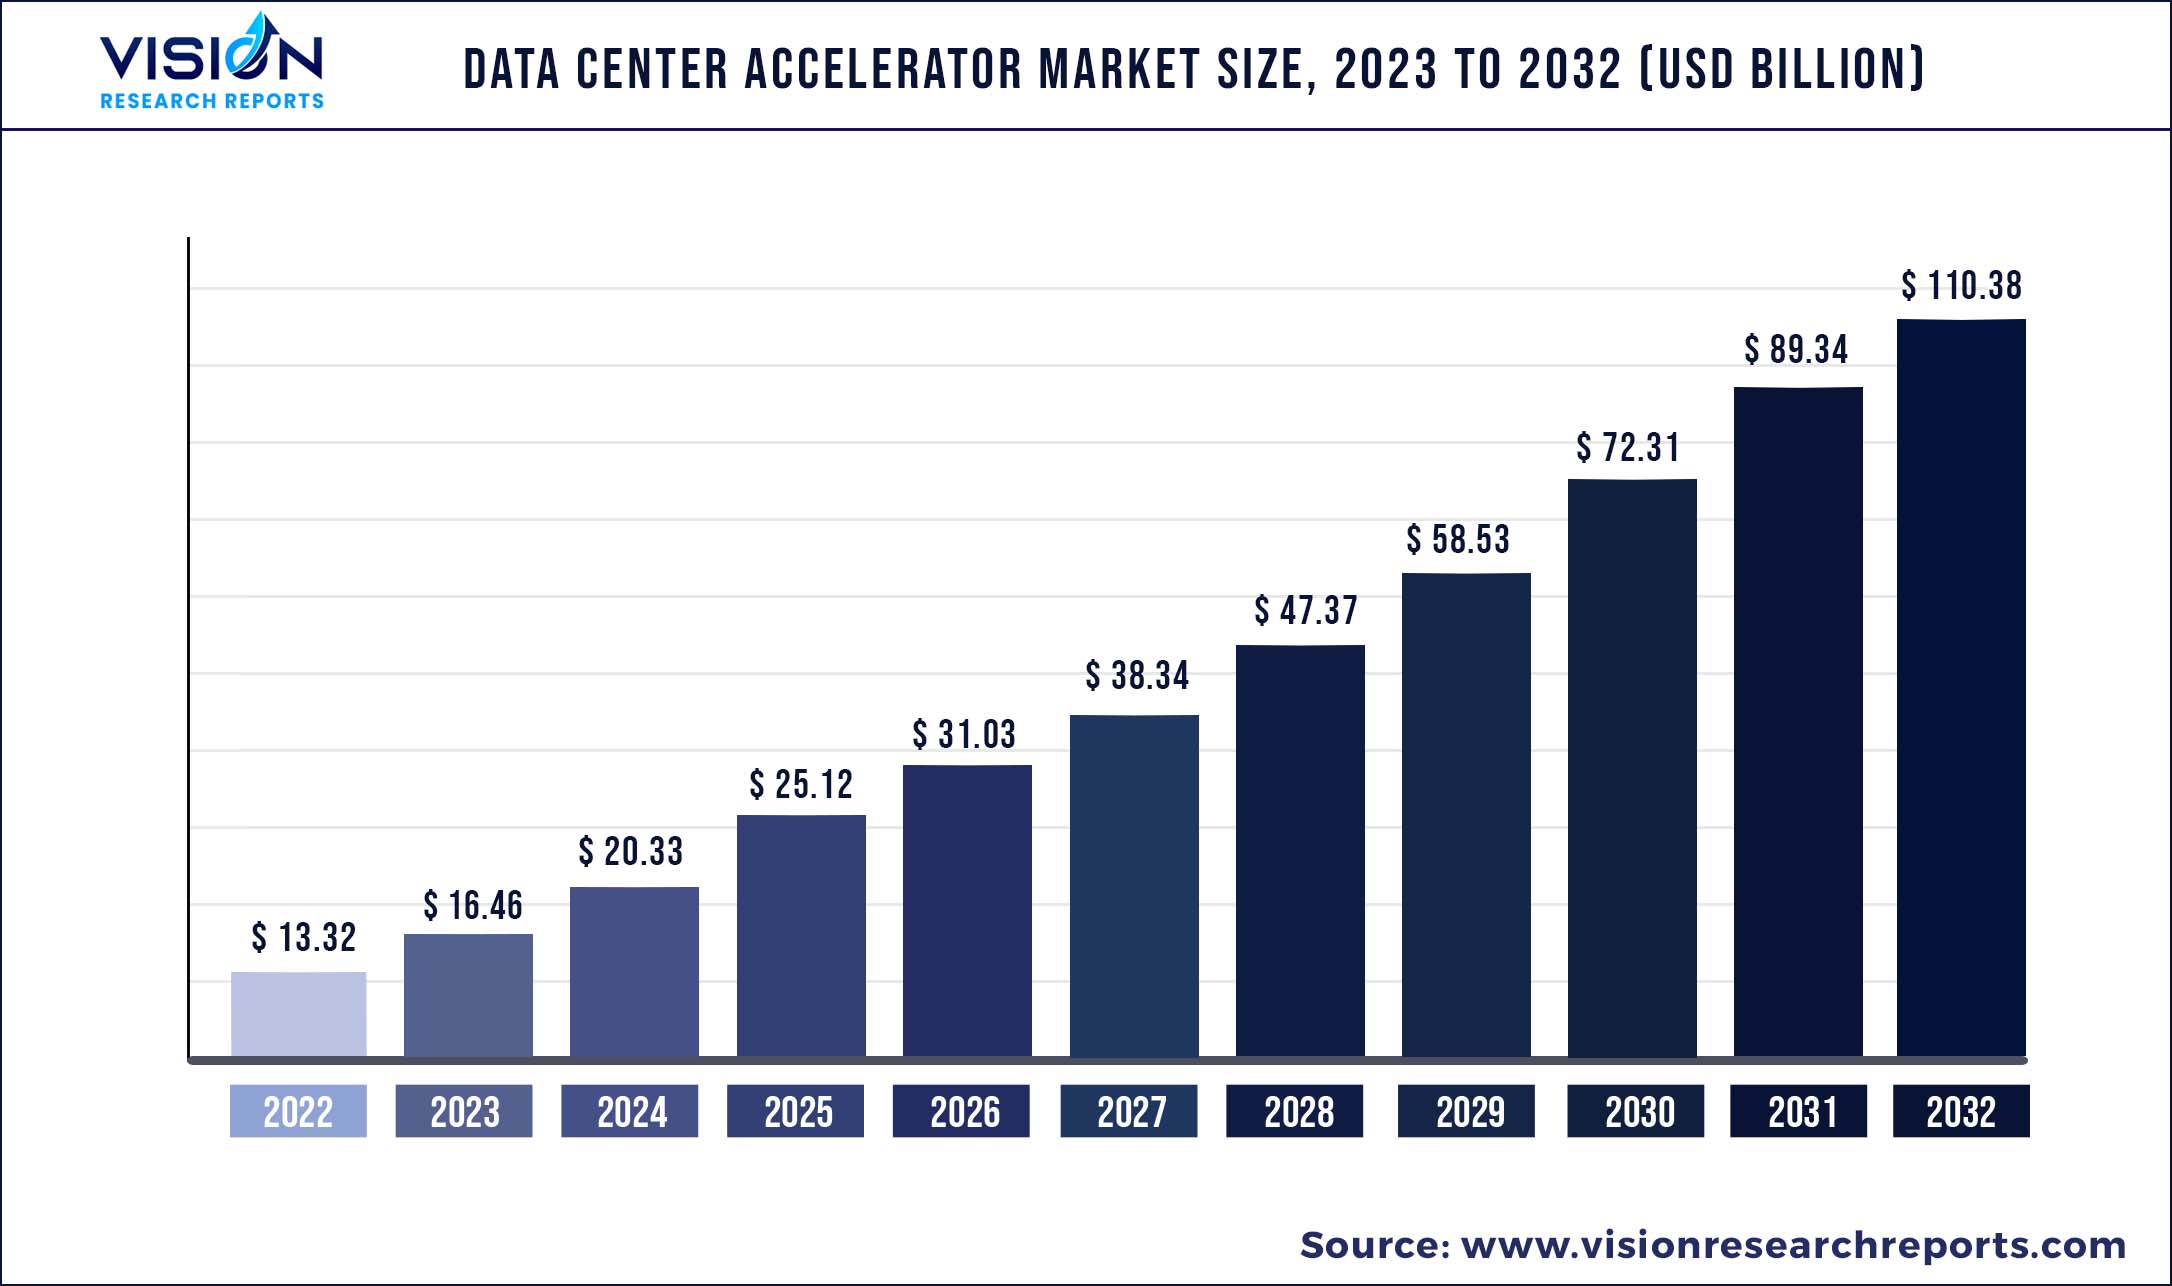 Data Center Accelerator Market Size 2023 to 2032